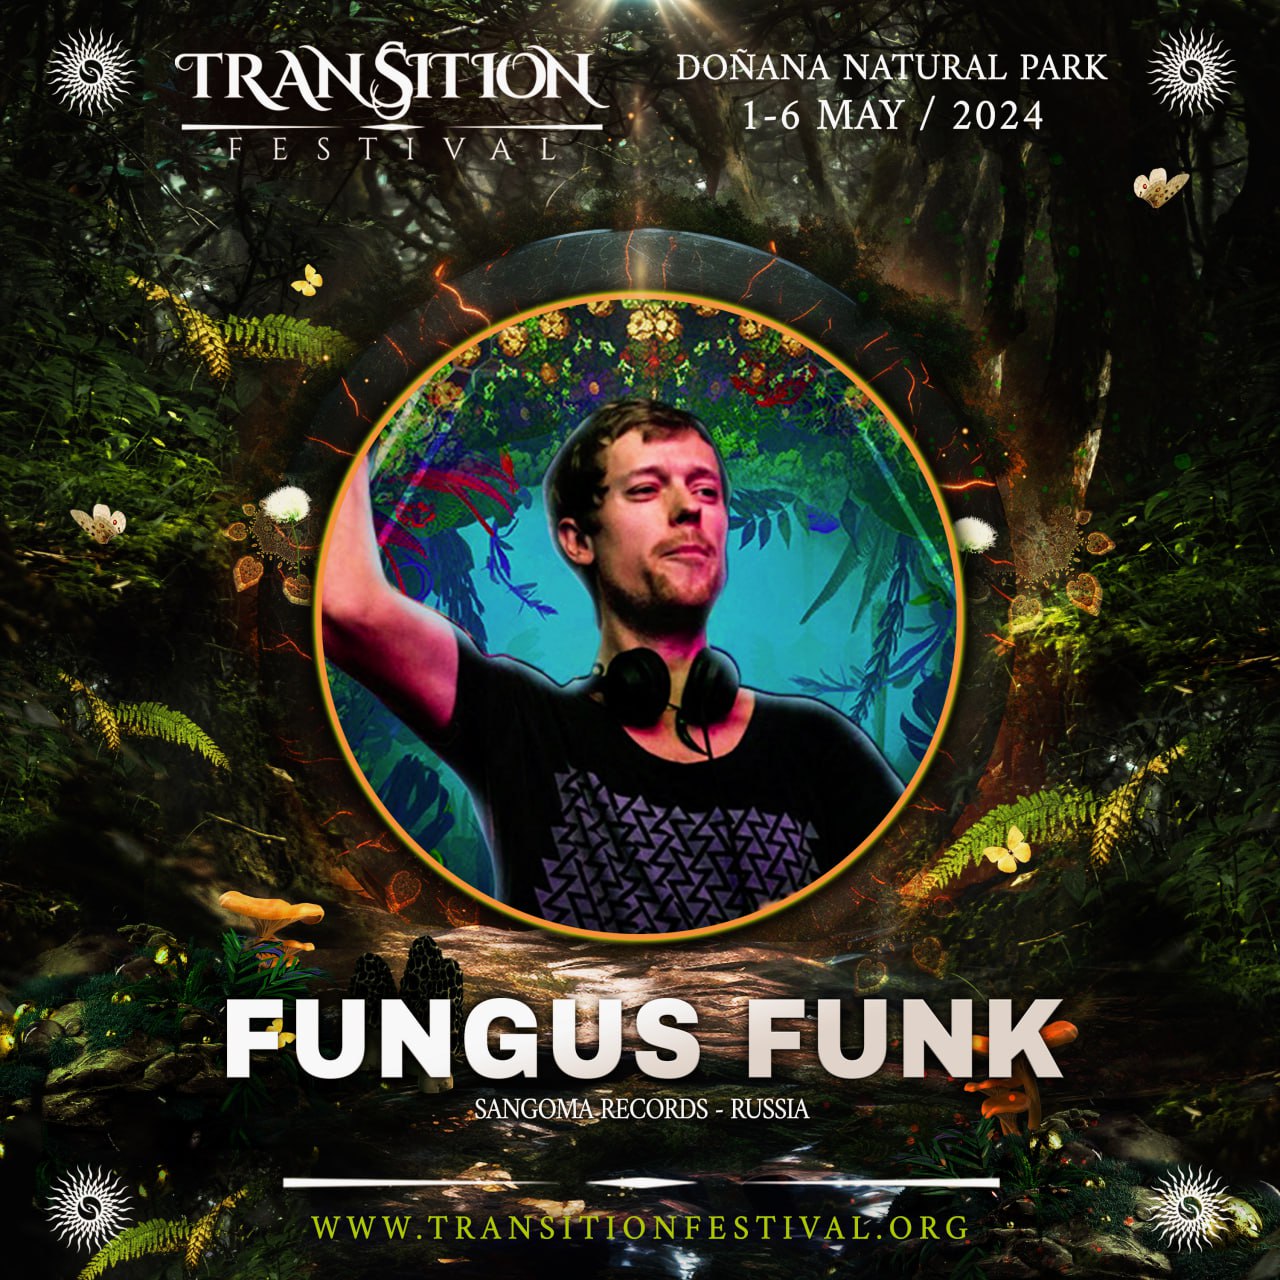 Fungus Funk